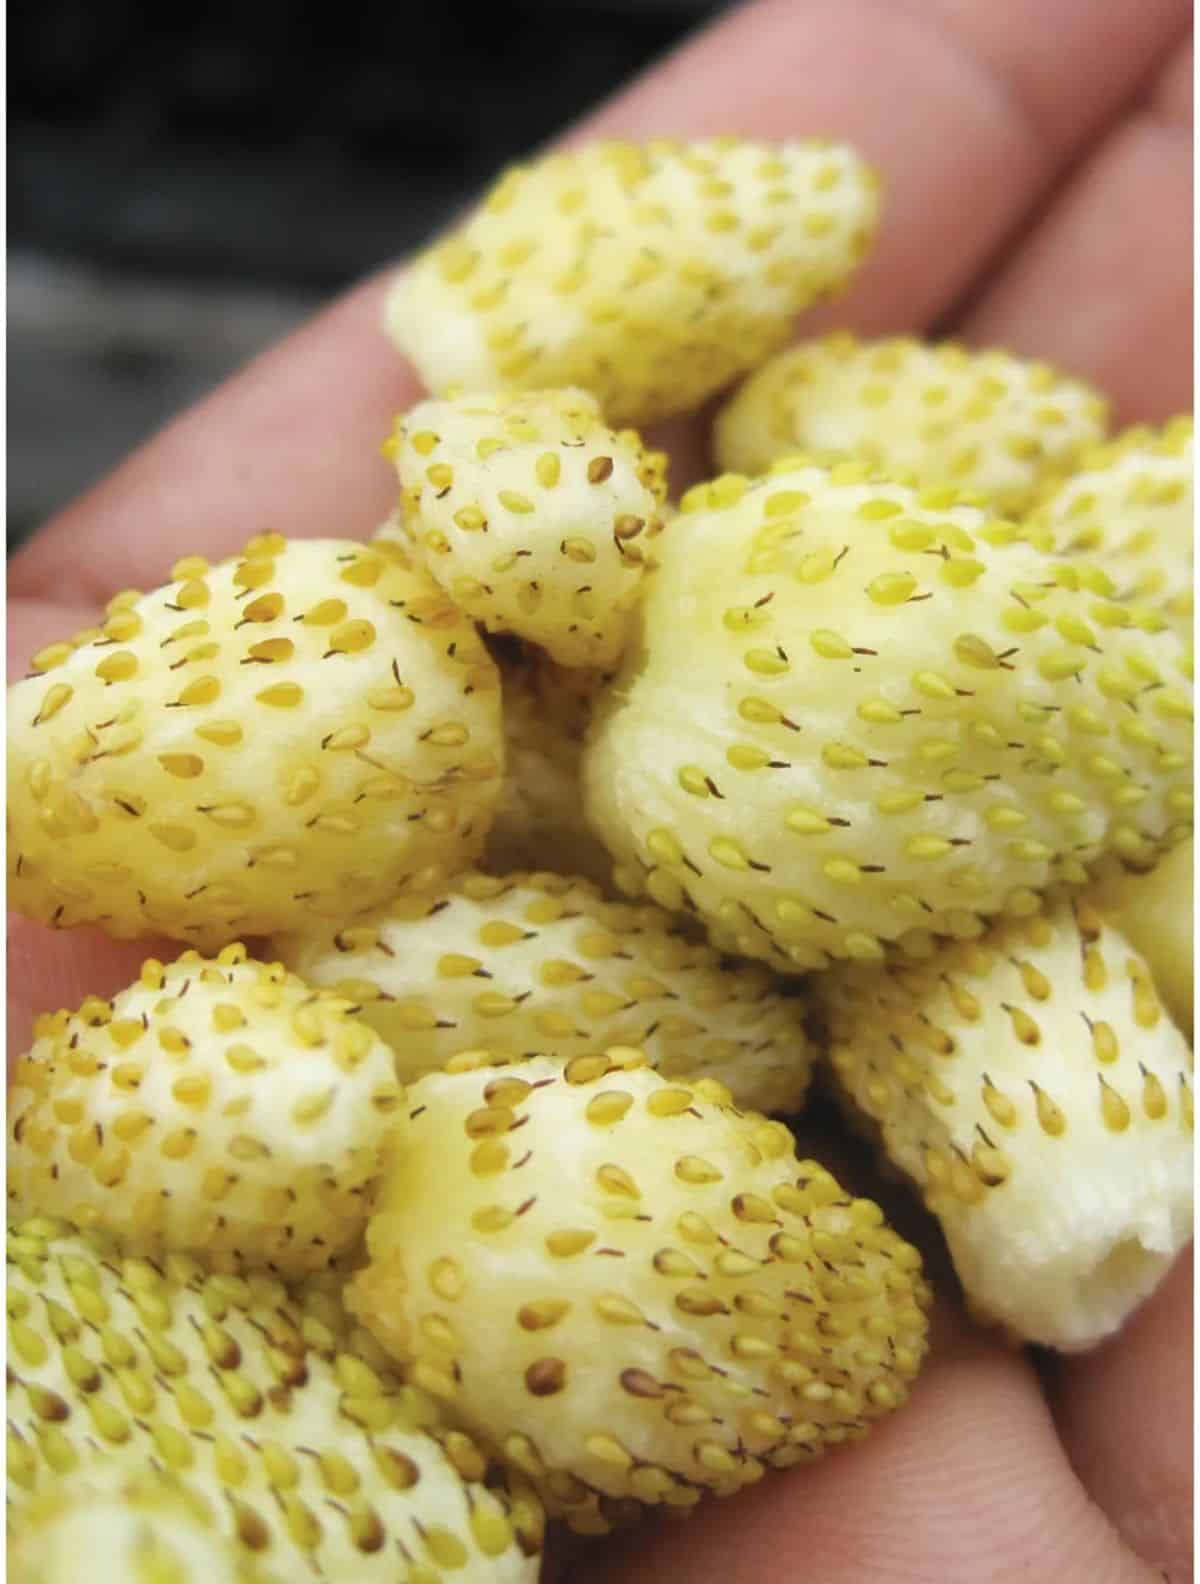 Ripe fruits of alpine yellow wonder strawberry variety on a hand.